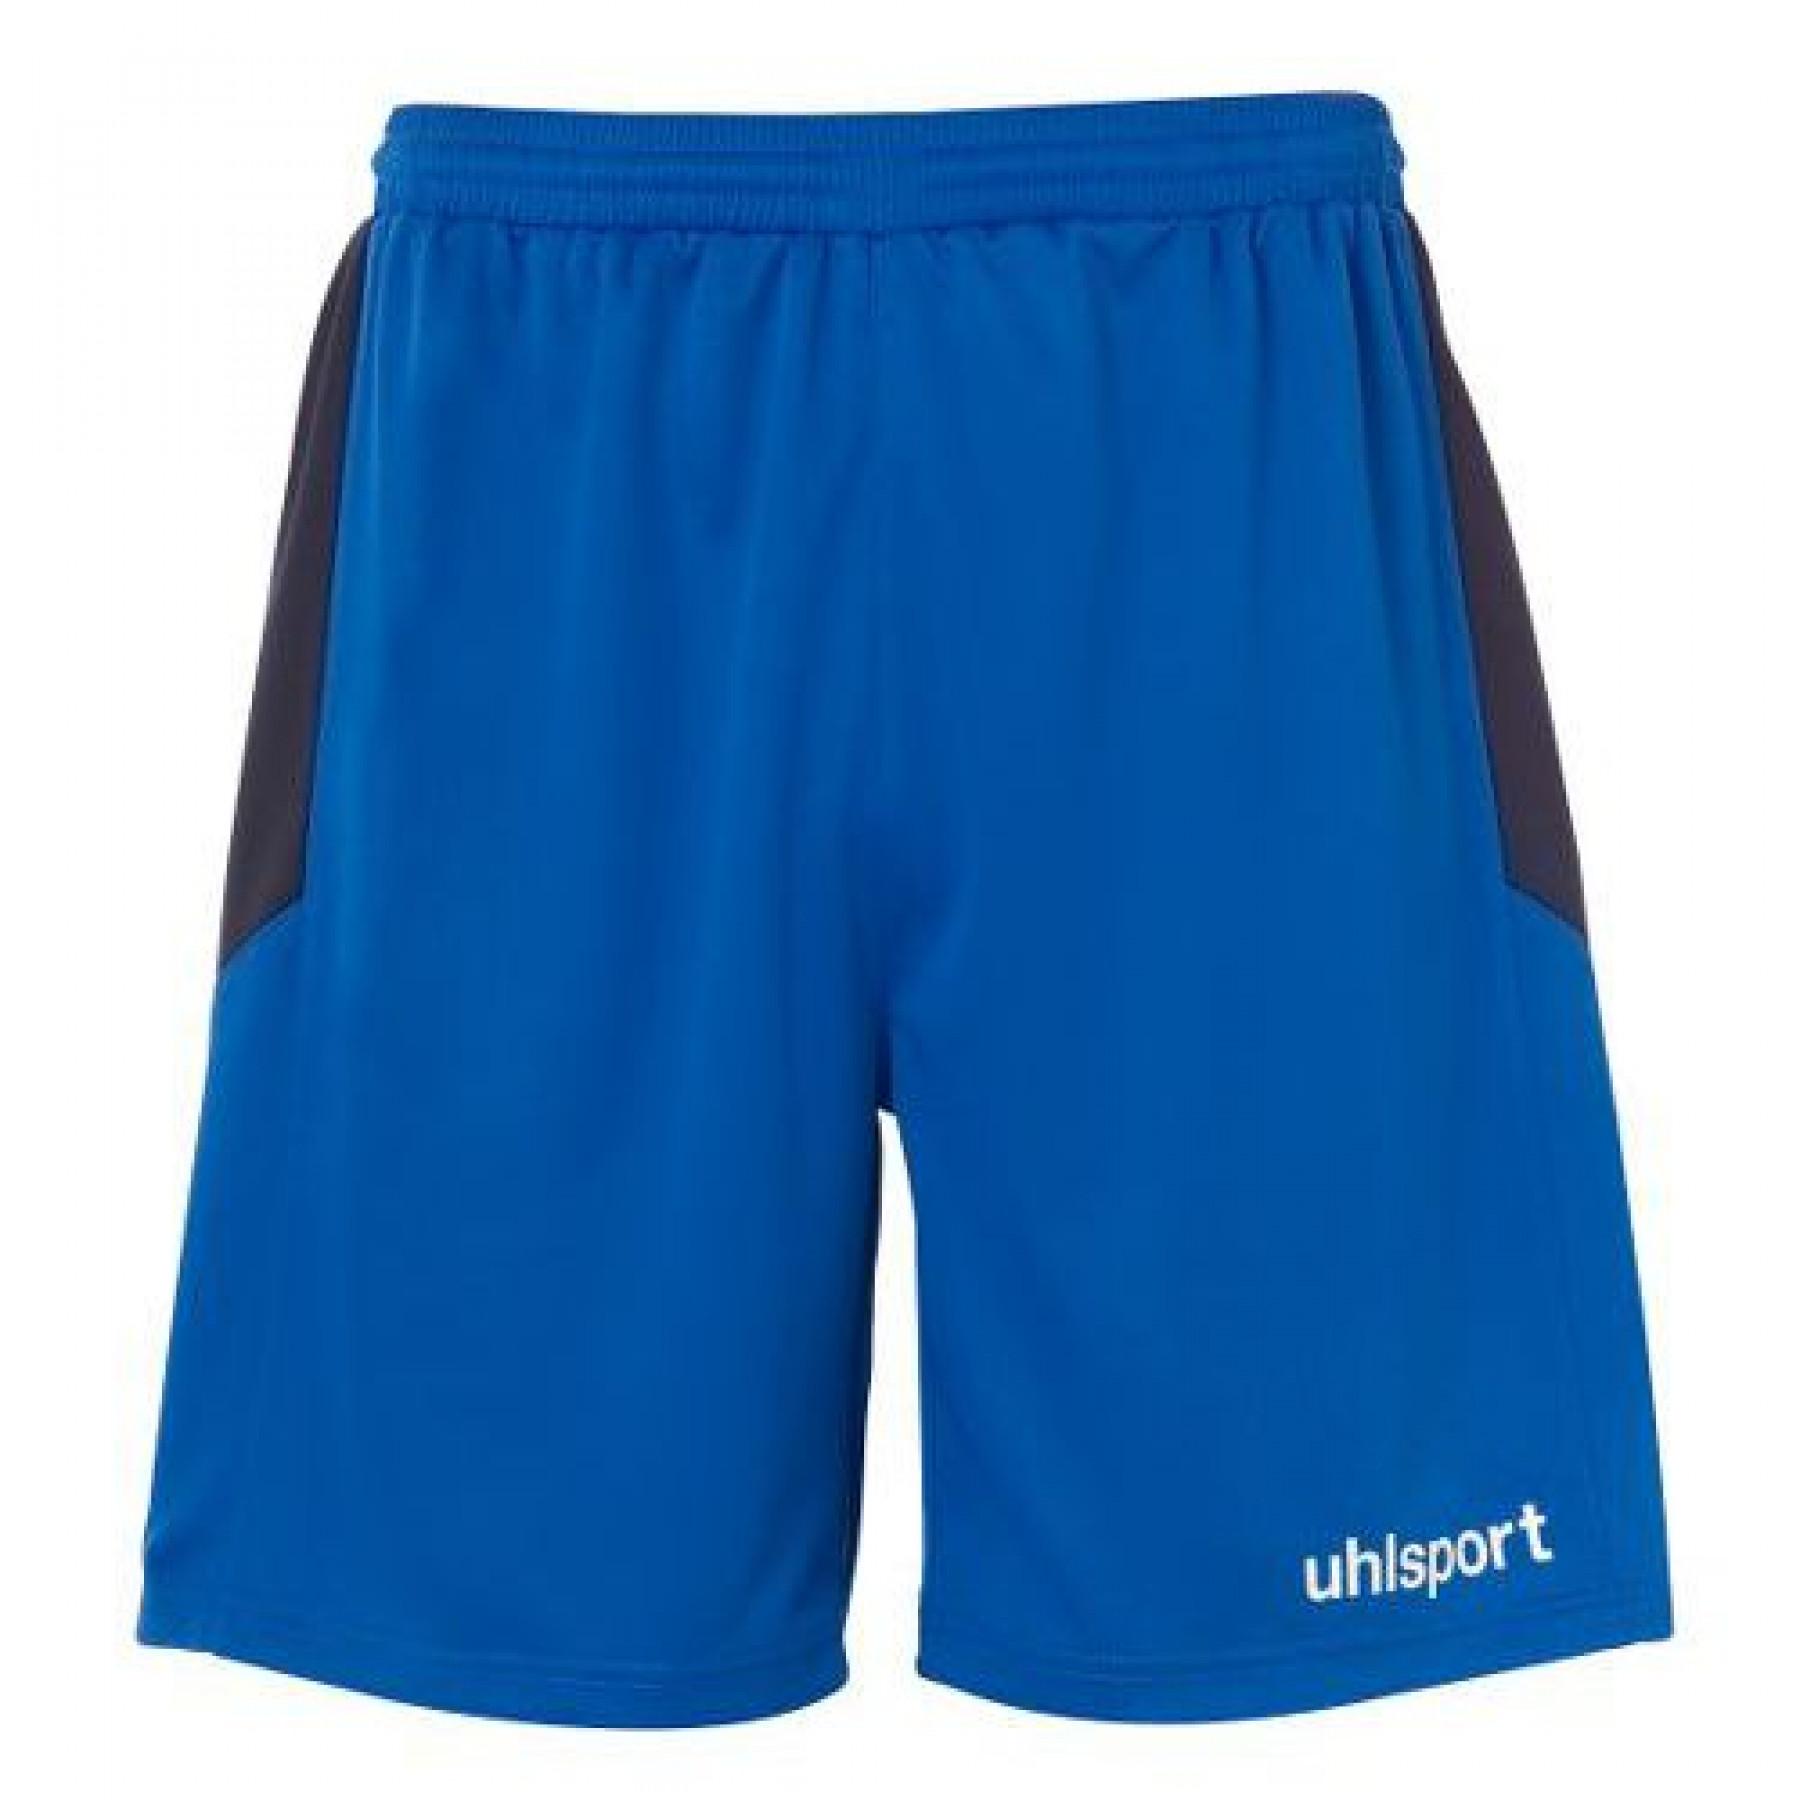 Uhlsport Goal Football Pantalon Hommes Short Bleu marine Polyester 